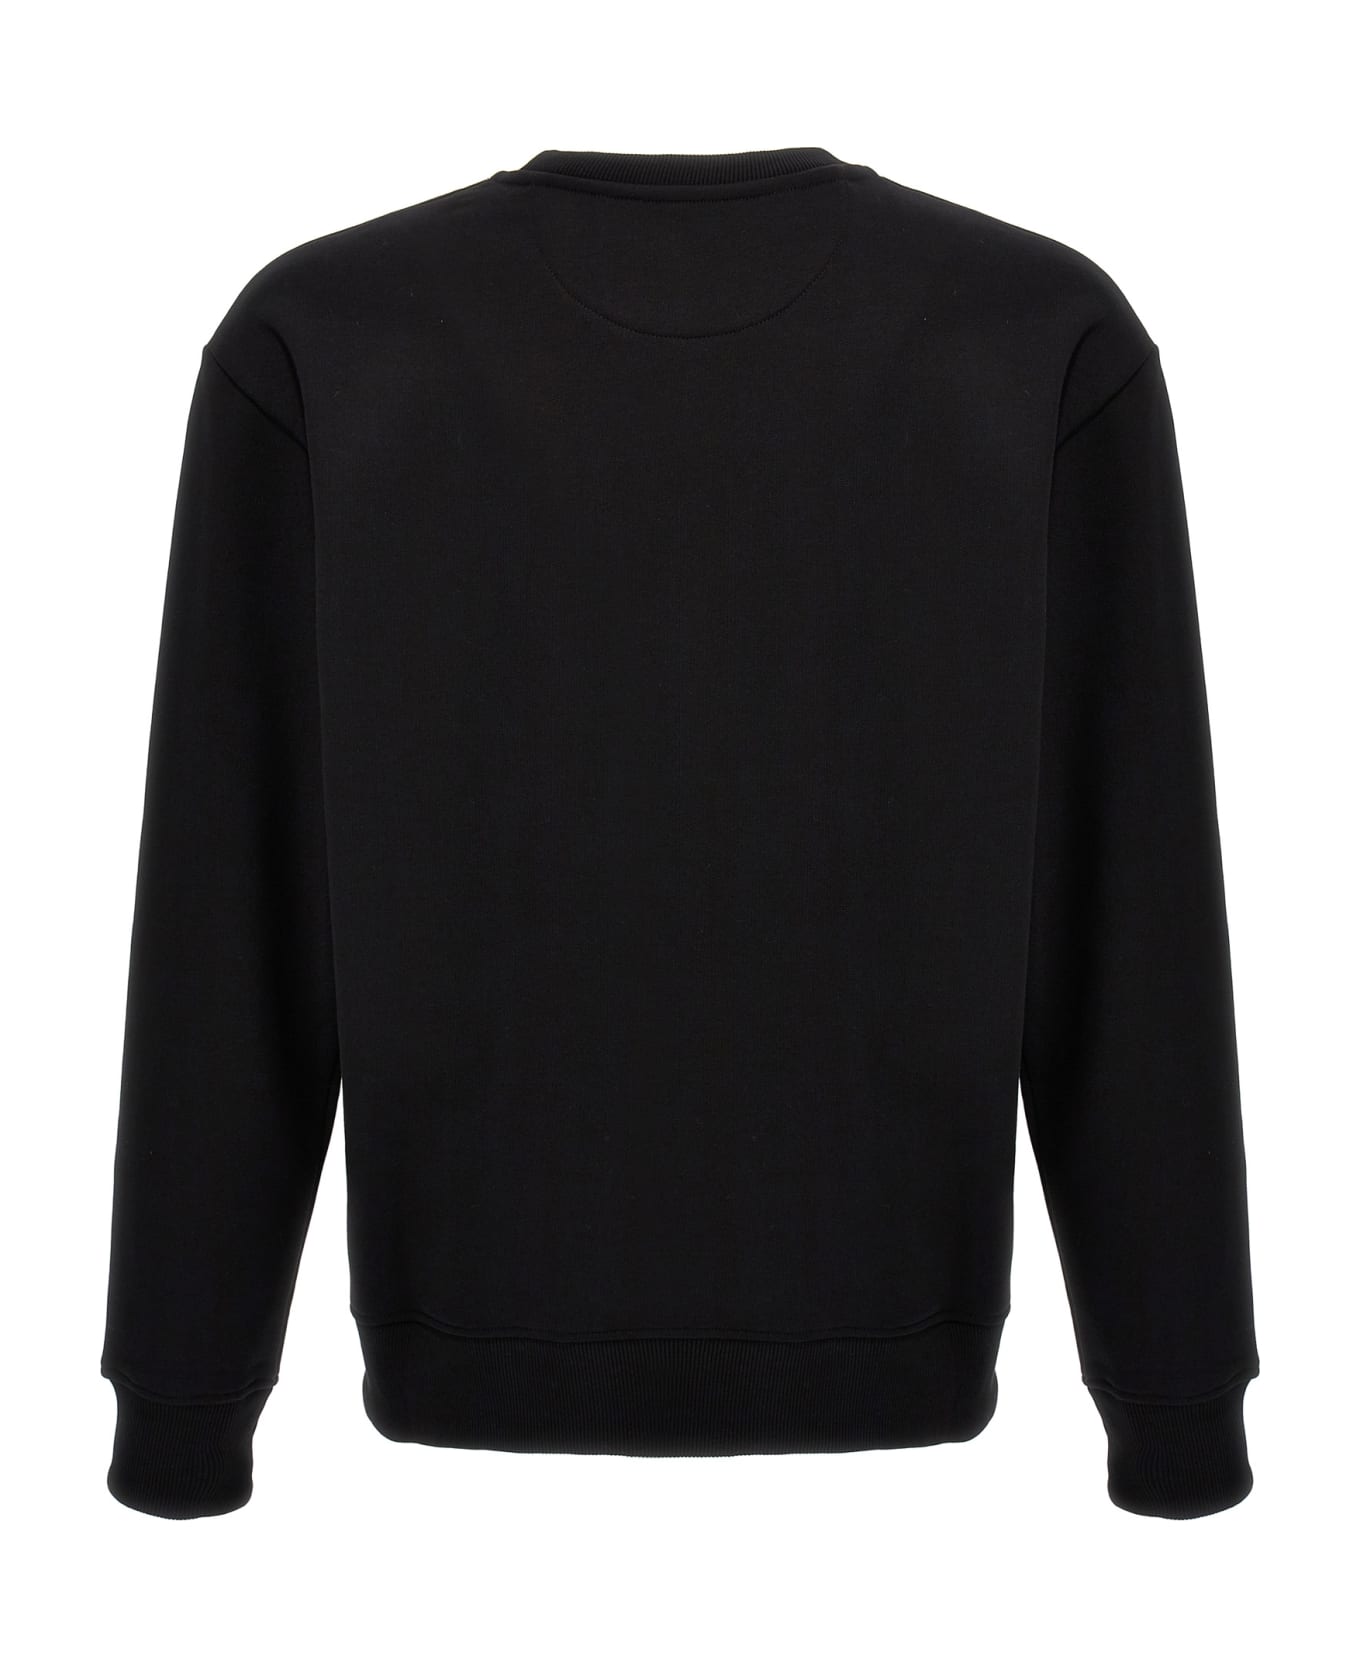 Valentino Garavani Valentino Logo Print Sweatshirt - Black